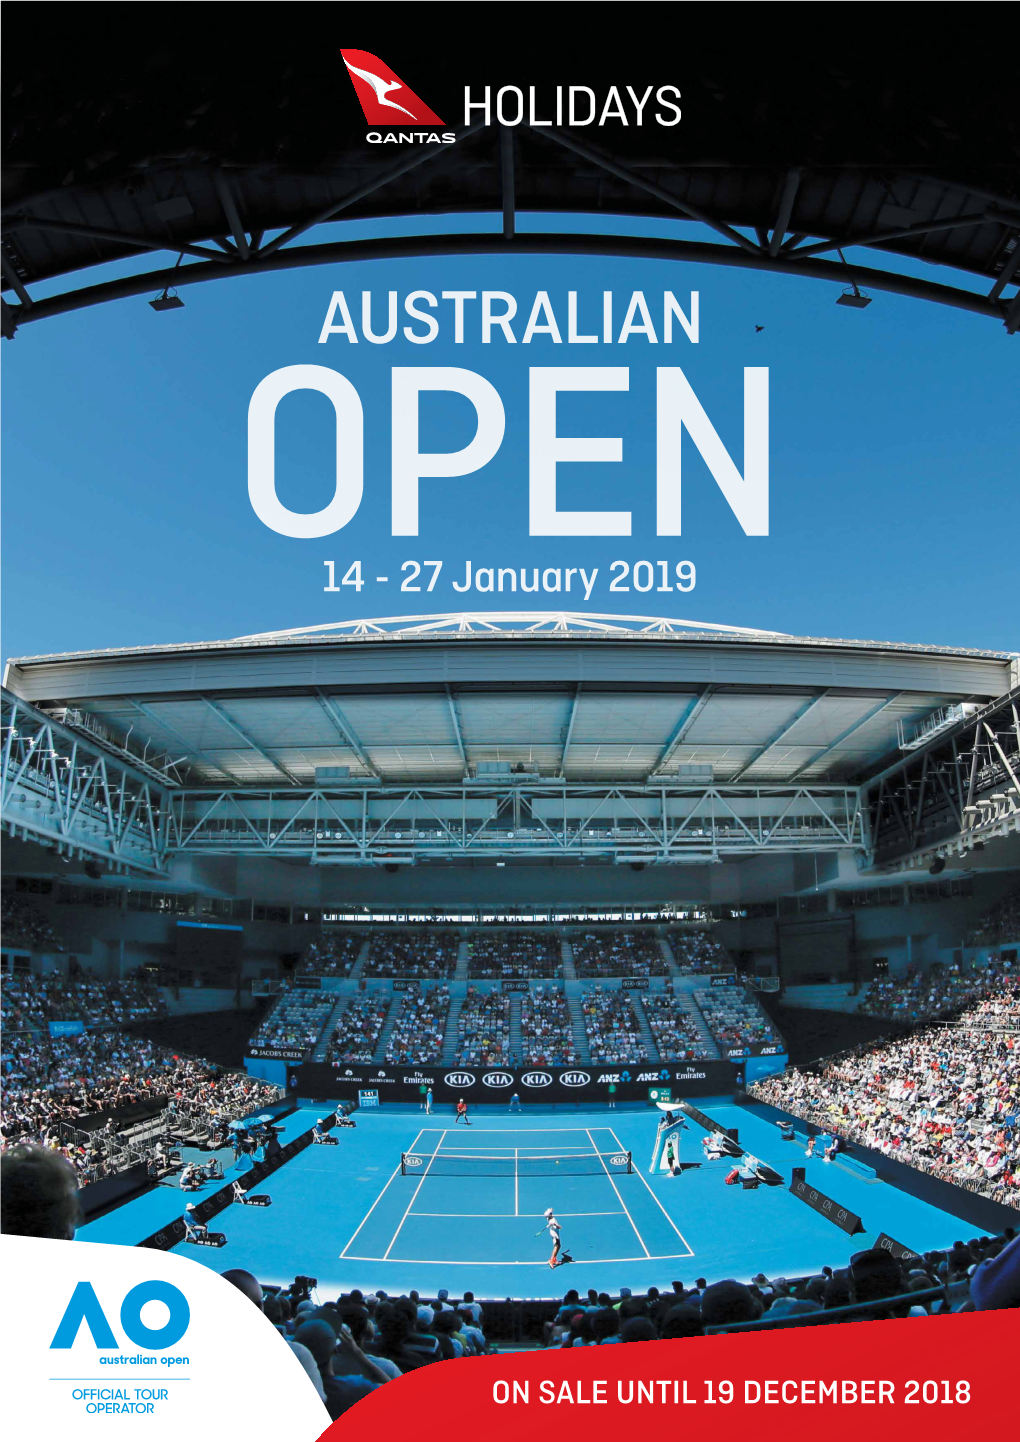 AUSTRALIAN OPEN 14 - 27 January 2019